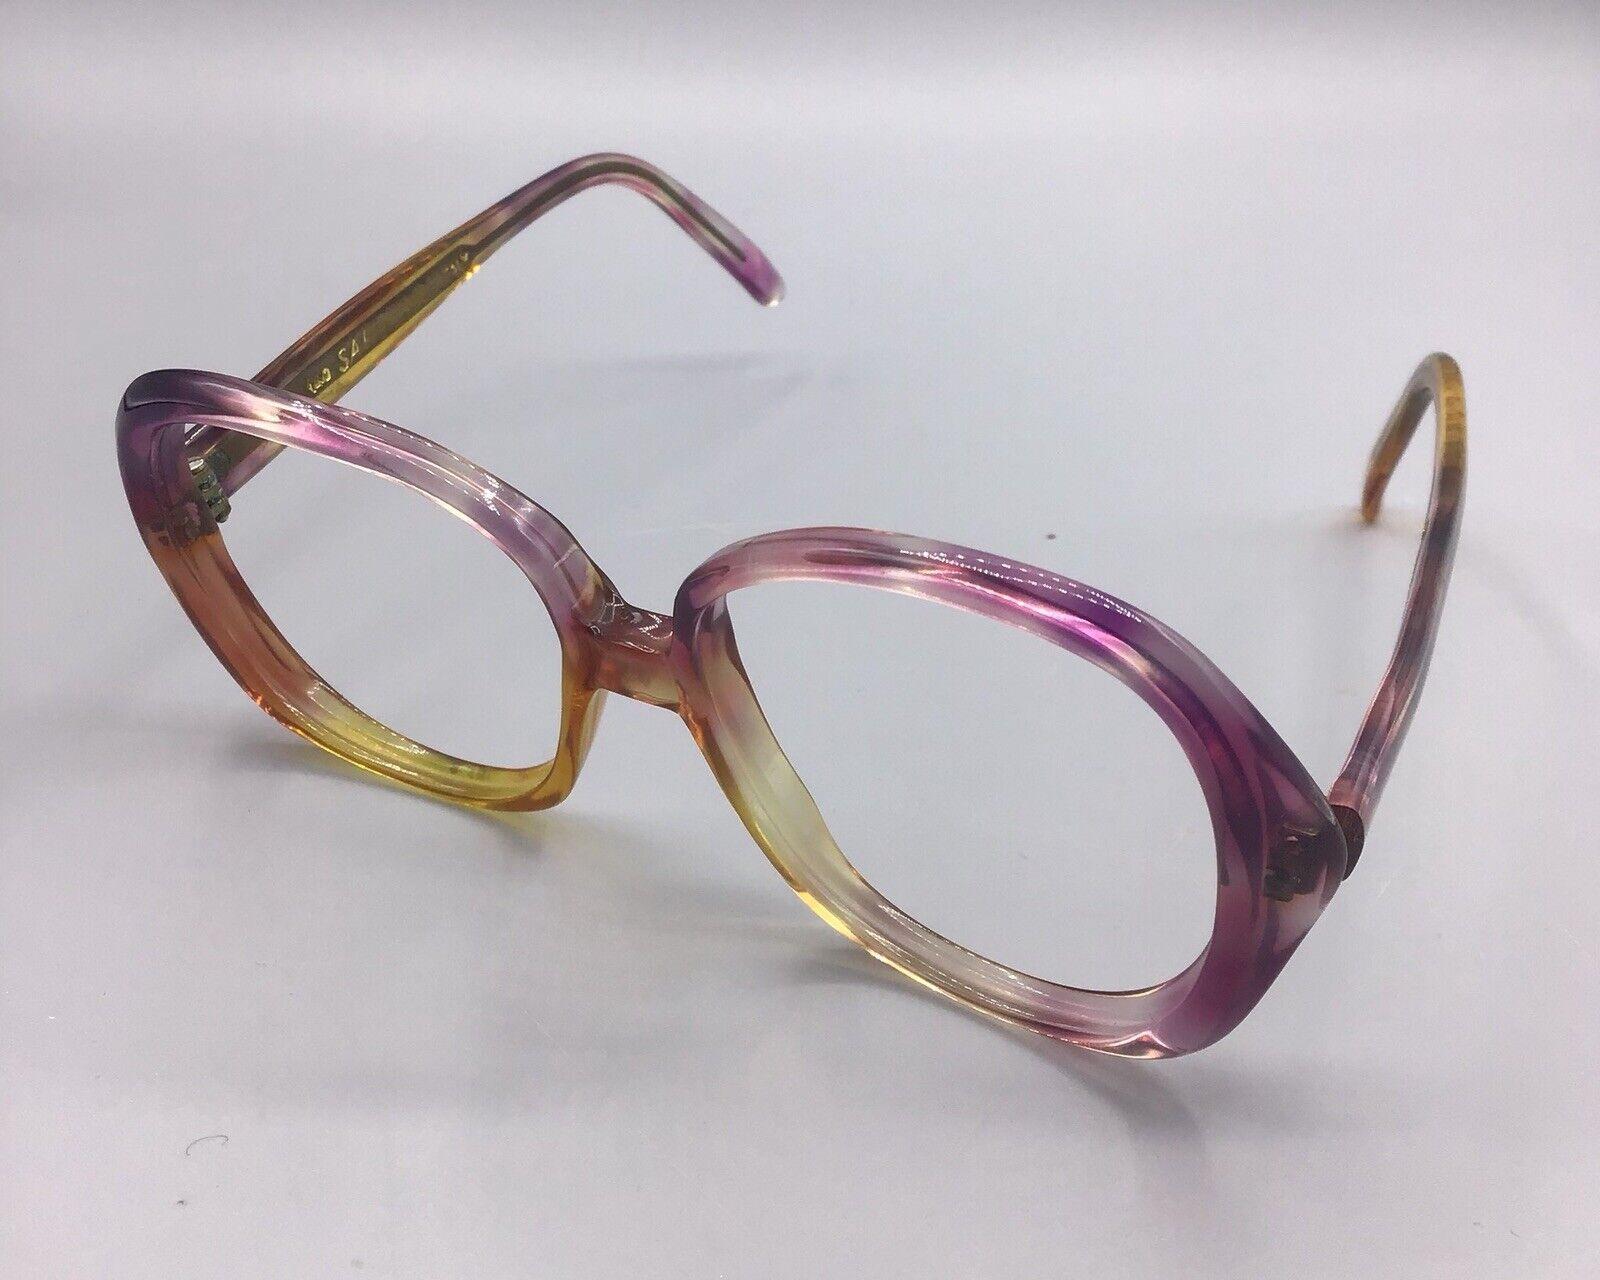 safilo denise 030 frame italy occhiale vintage eyewear brillen lunettes